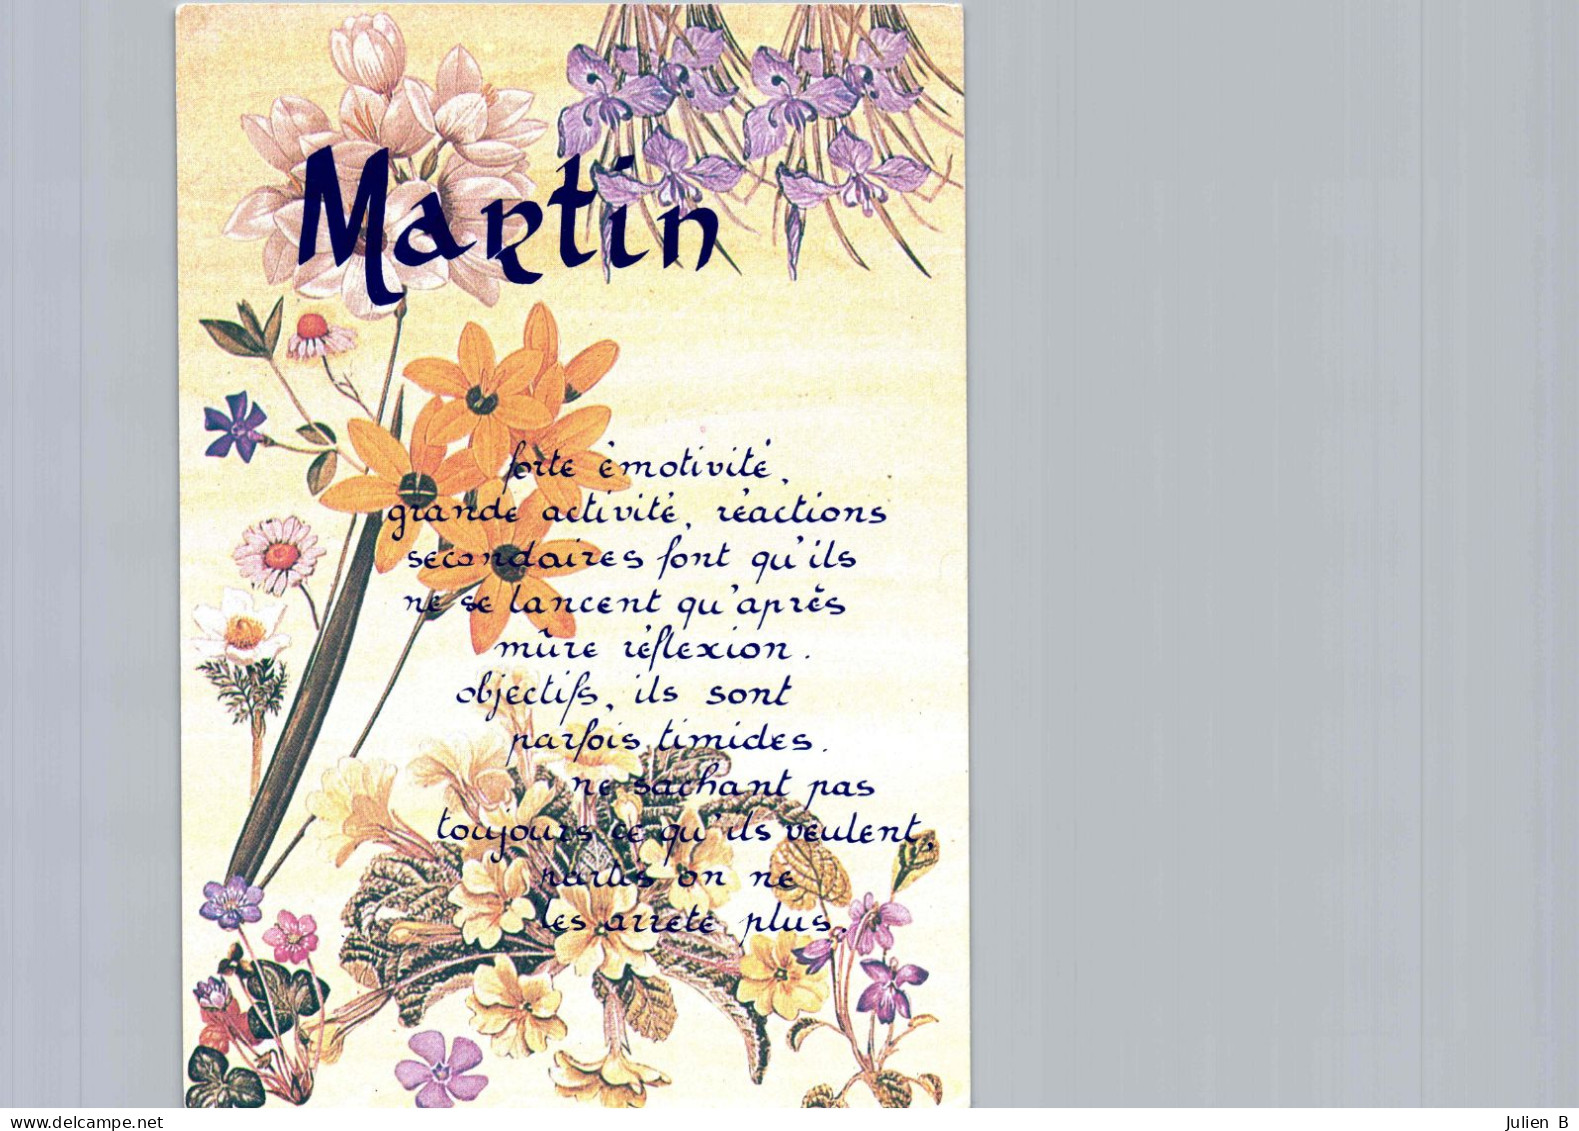 Martin, Edition ICDF - Vornamen